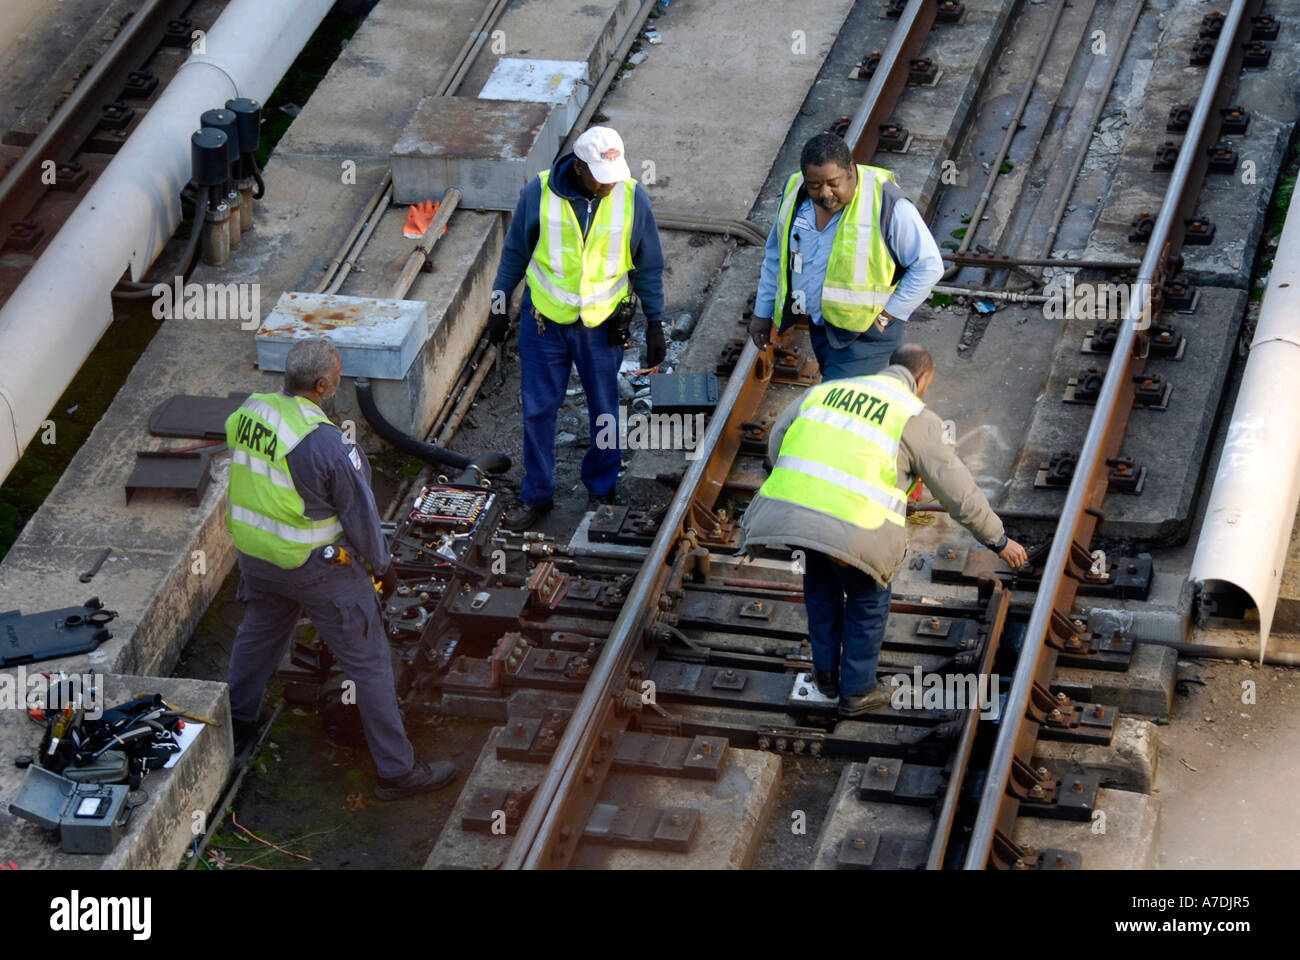 MARTA maintenance workers repair track section on Atlanta Georgia GA rapid transit subway system Stock Photo